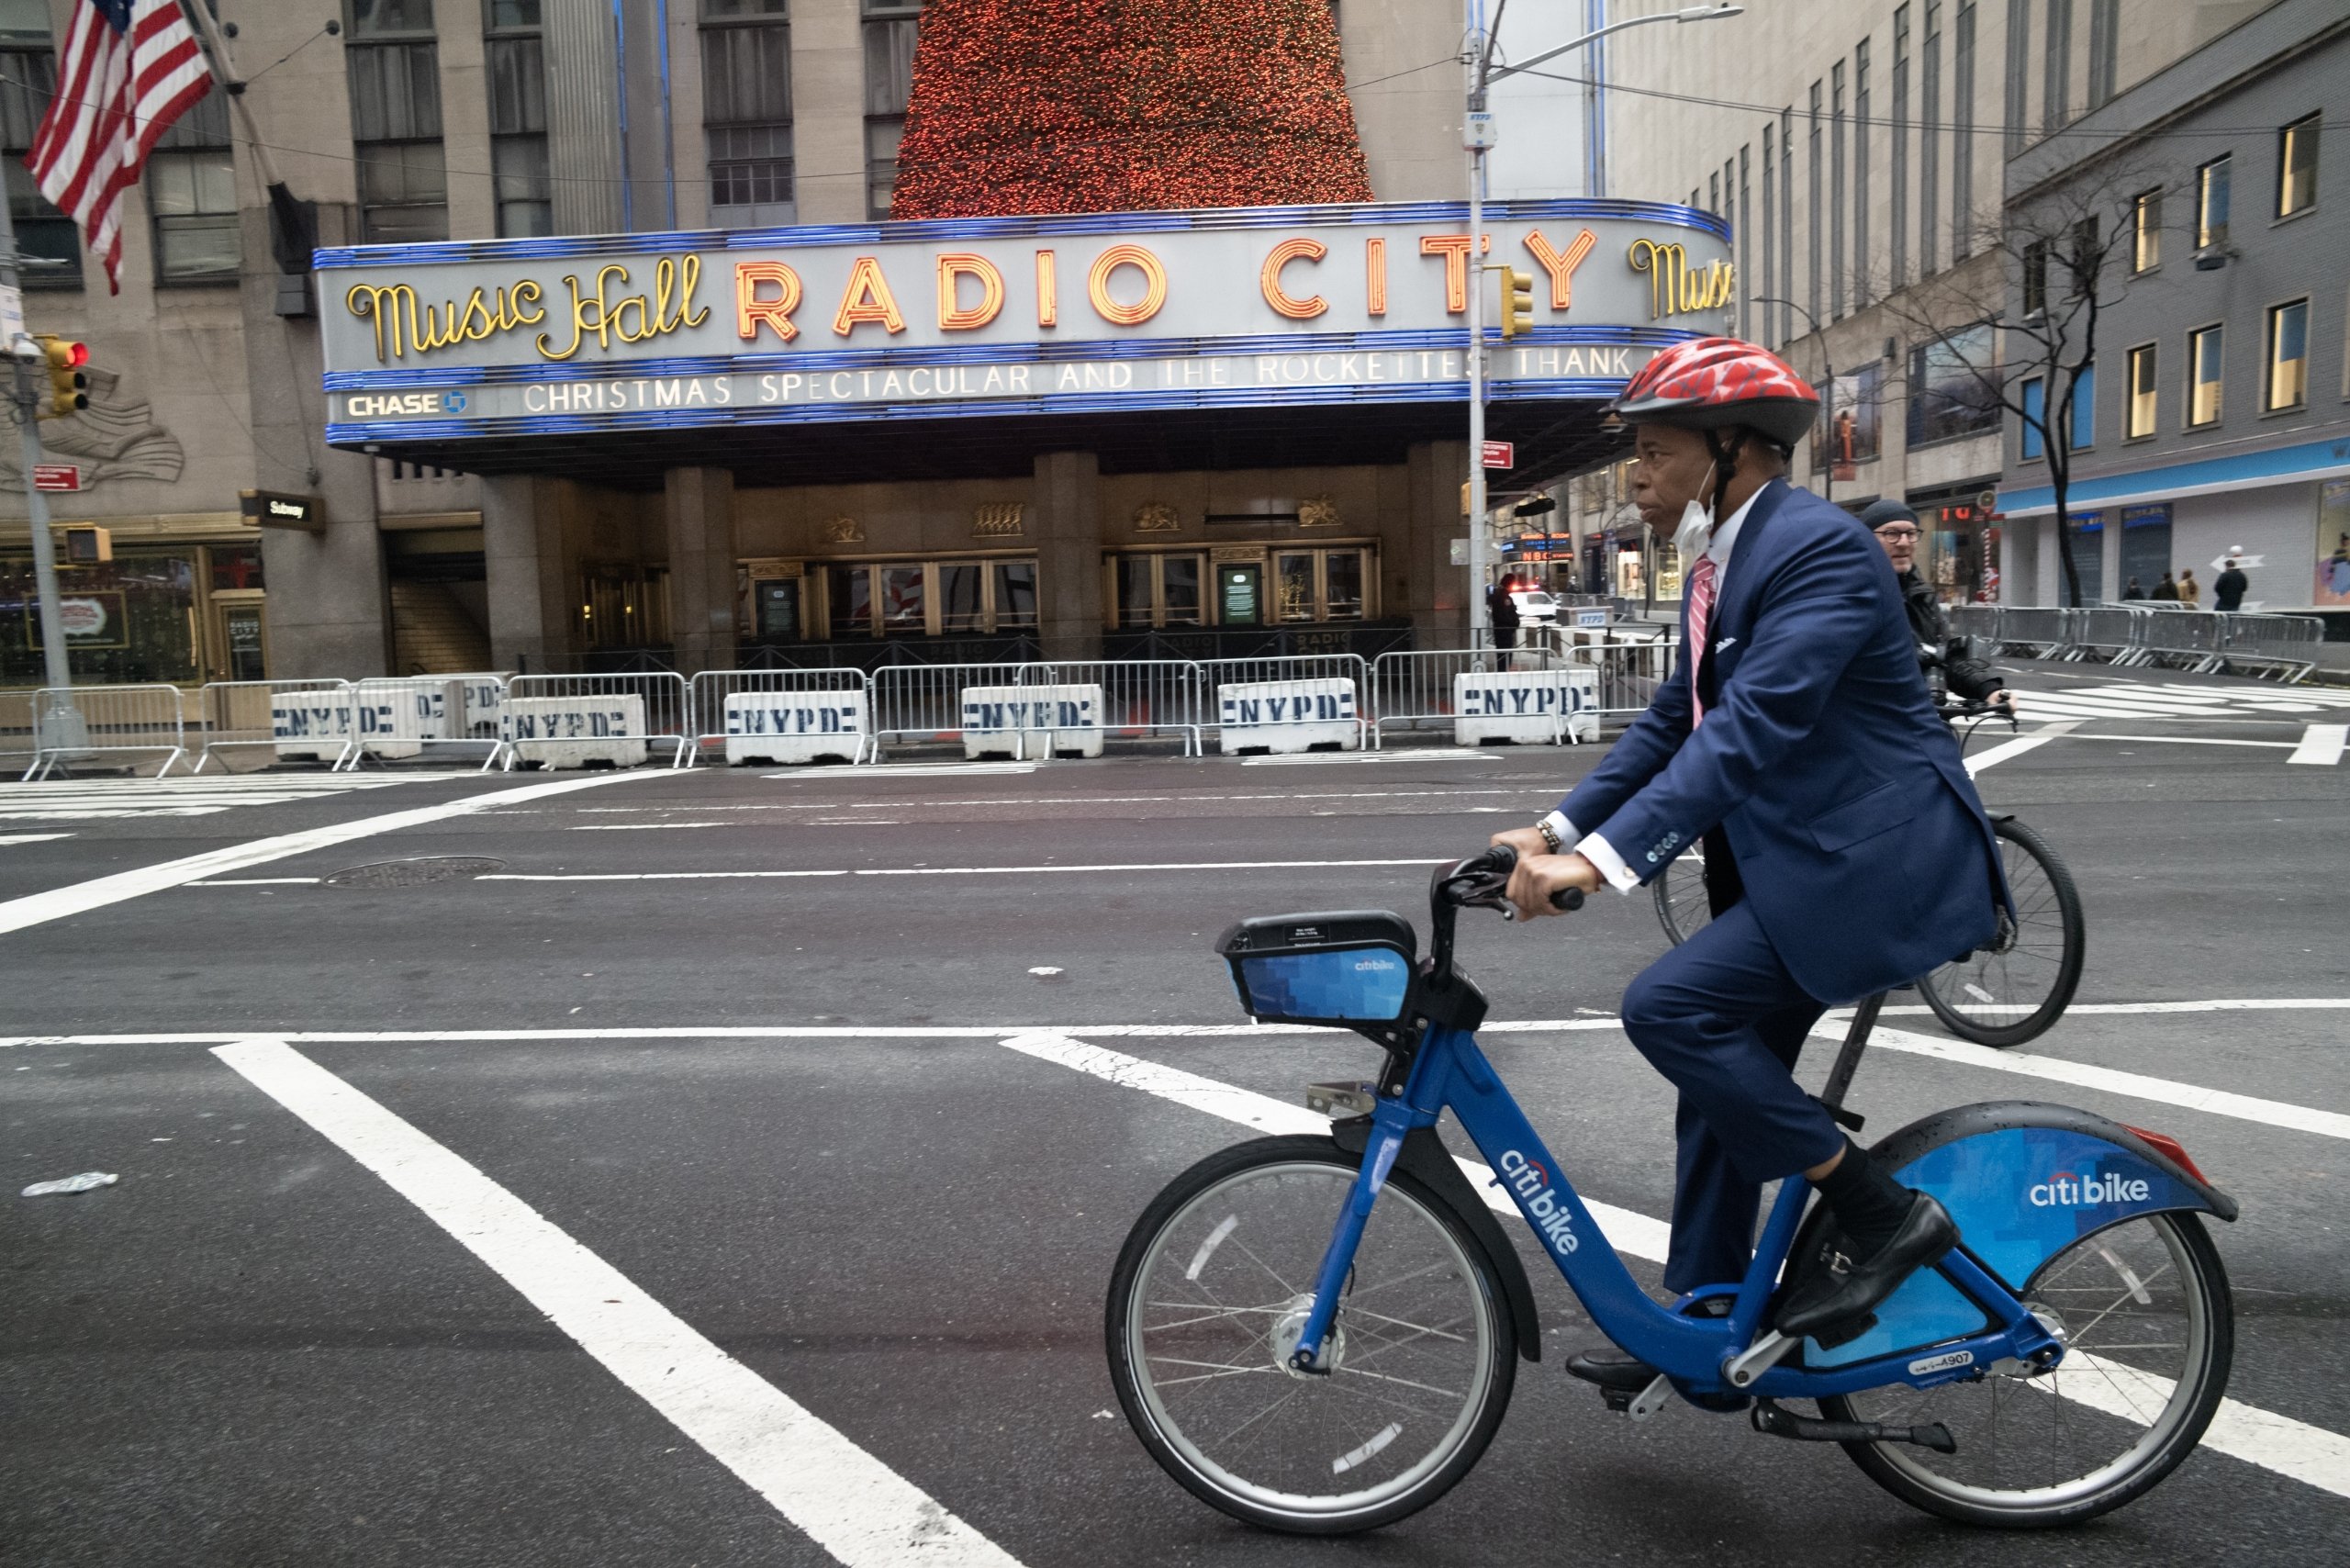 New York Mayor Eric Adams rides his bike past Radio City Music Hall on Avenue of the Americas on his way to work, New York, U.S., Aug. 7, 2021. (dpa Photo)